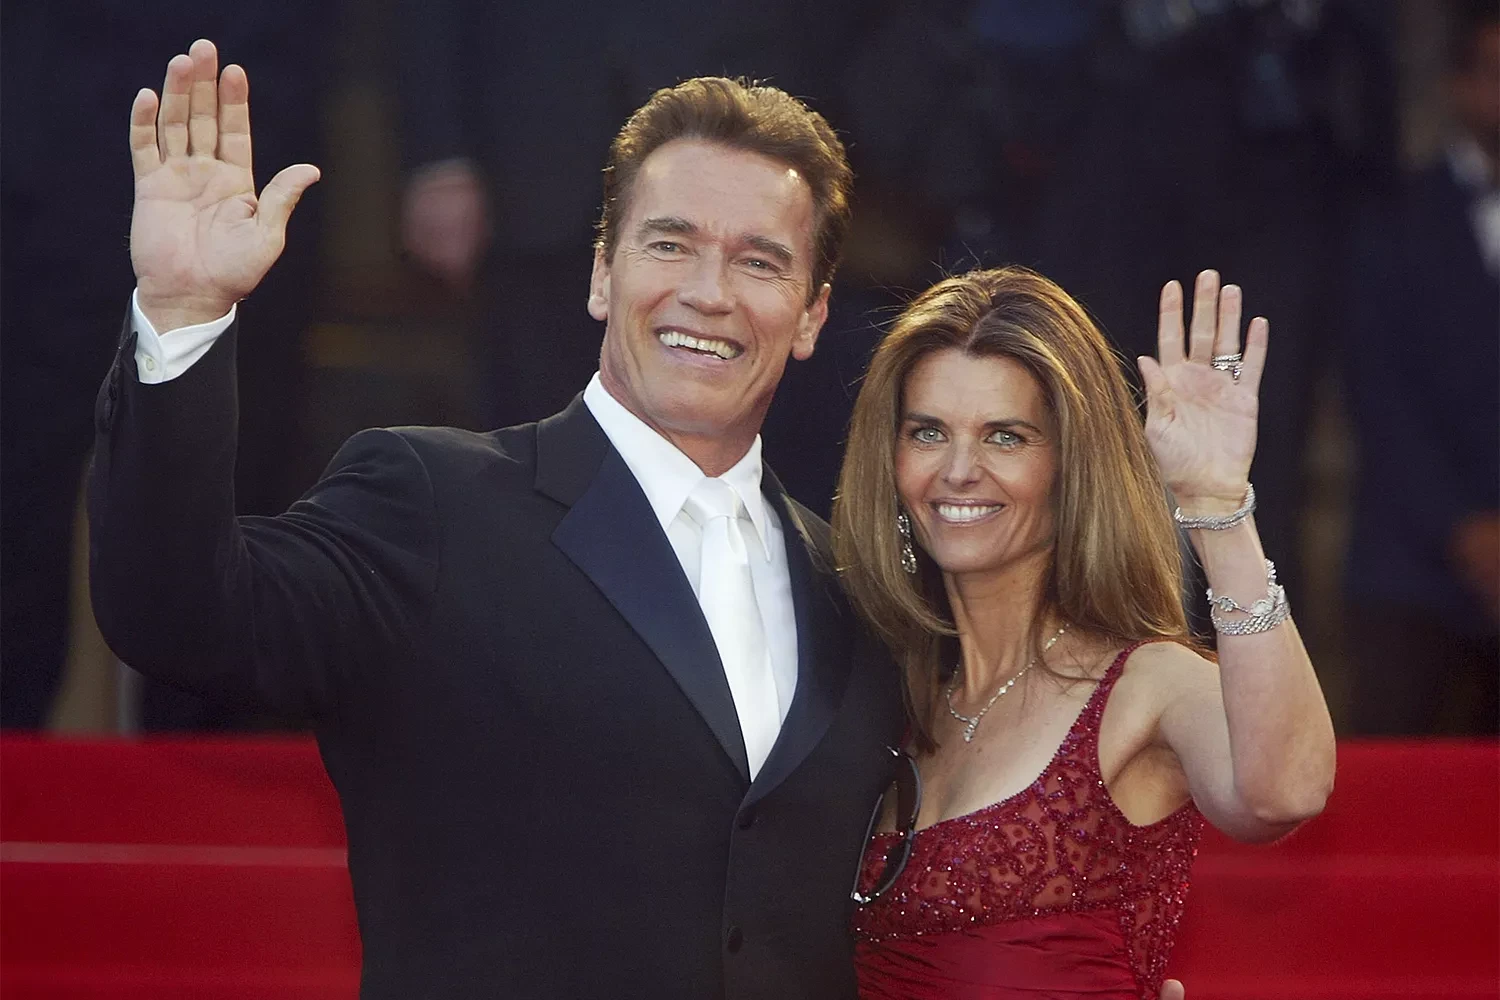 Schwarzenegger and Shriver divorced in 2011